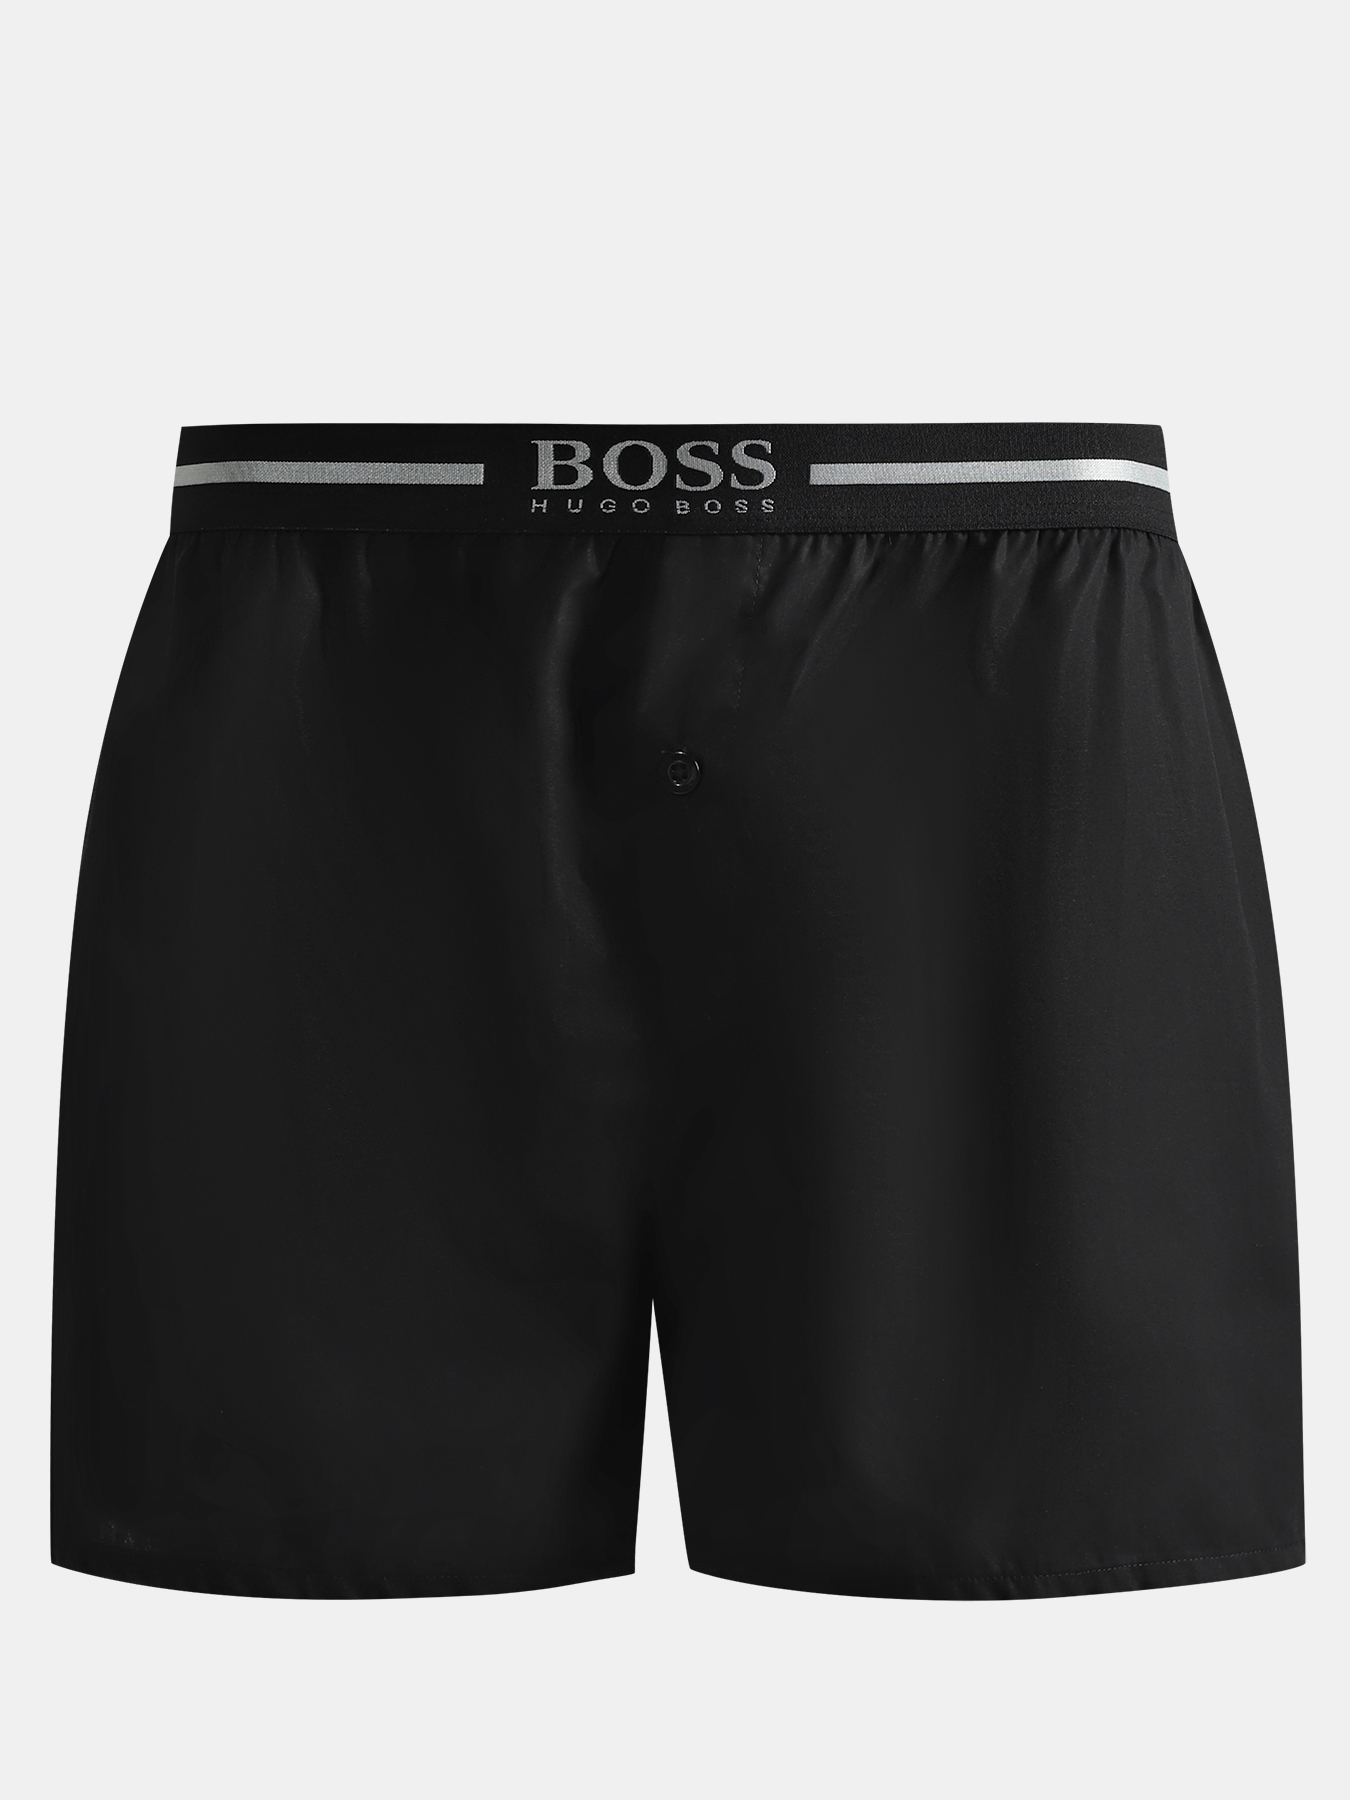 BOSS Трусы Boxer Shorts (2 шт) 359838-044